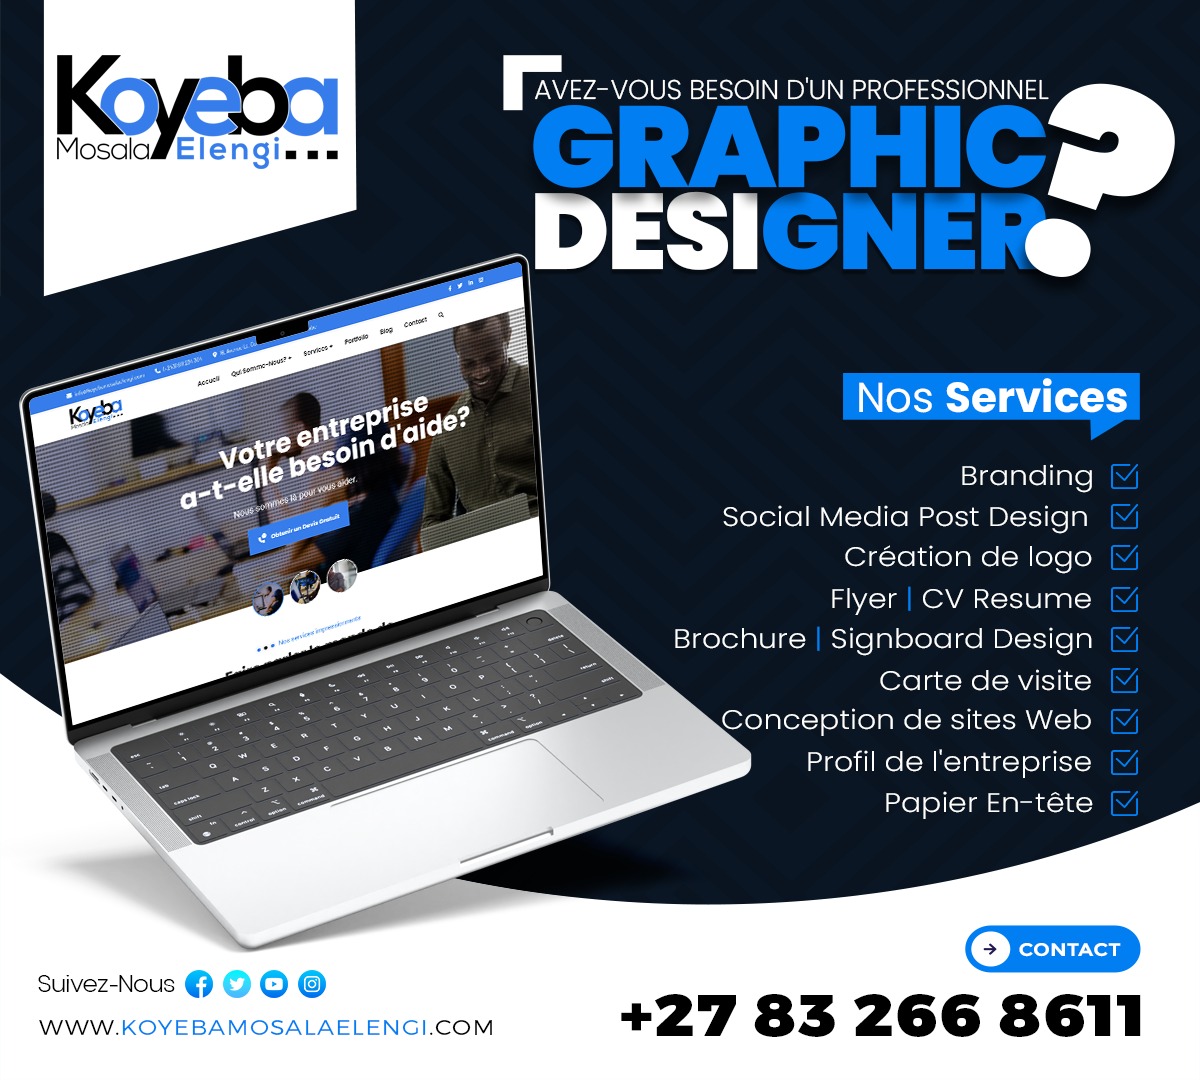 Koyeba Mosala Elengi👌
Chez nous c'est la qualité👌
#digitalart #DigitalArtist #GraphicDesign #digitalmarketing #marketingagency #marketingbusiness #GraphicDesigners